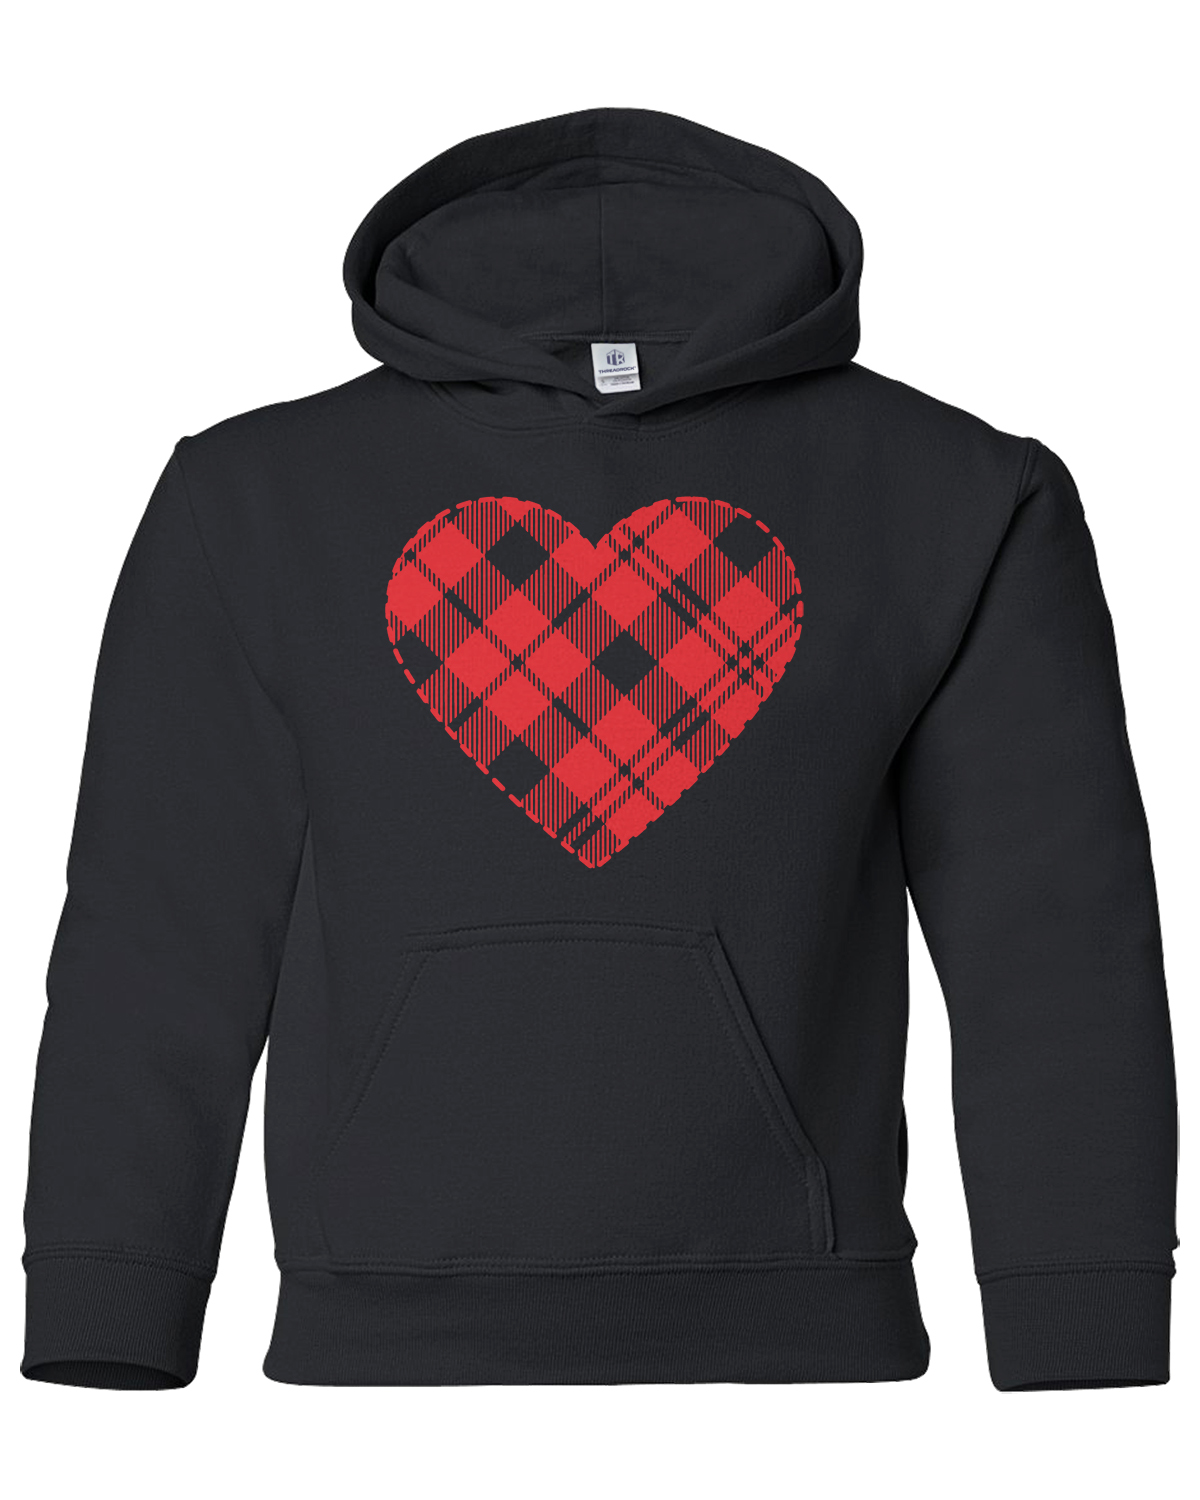 Big Plaid Red Heart Valentine's Day Youth Hoodie Sweatshirt Love